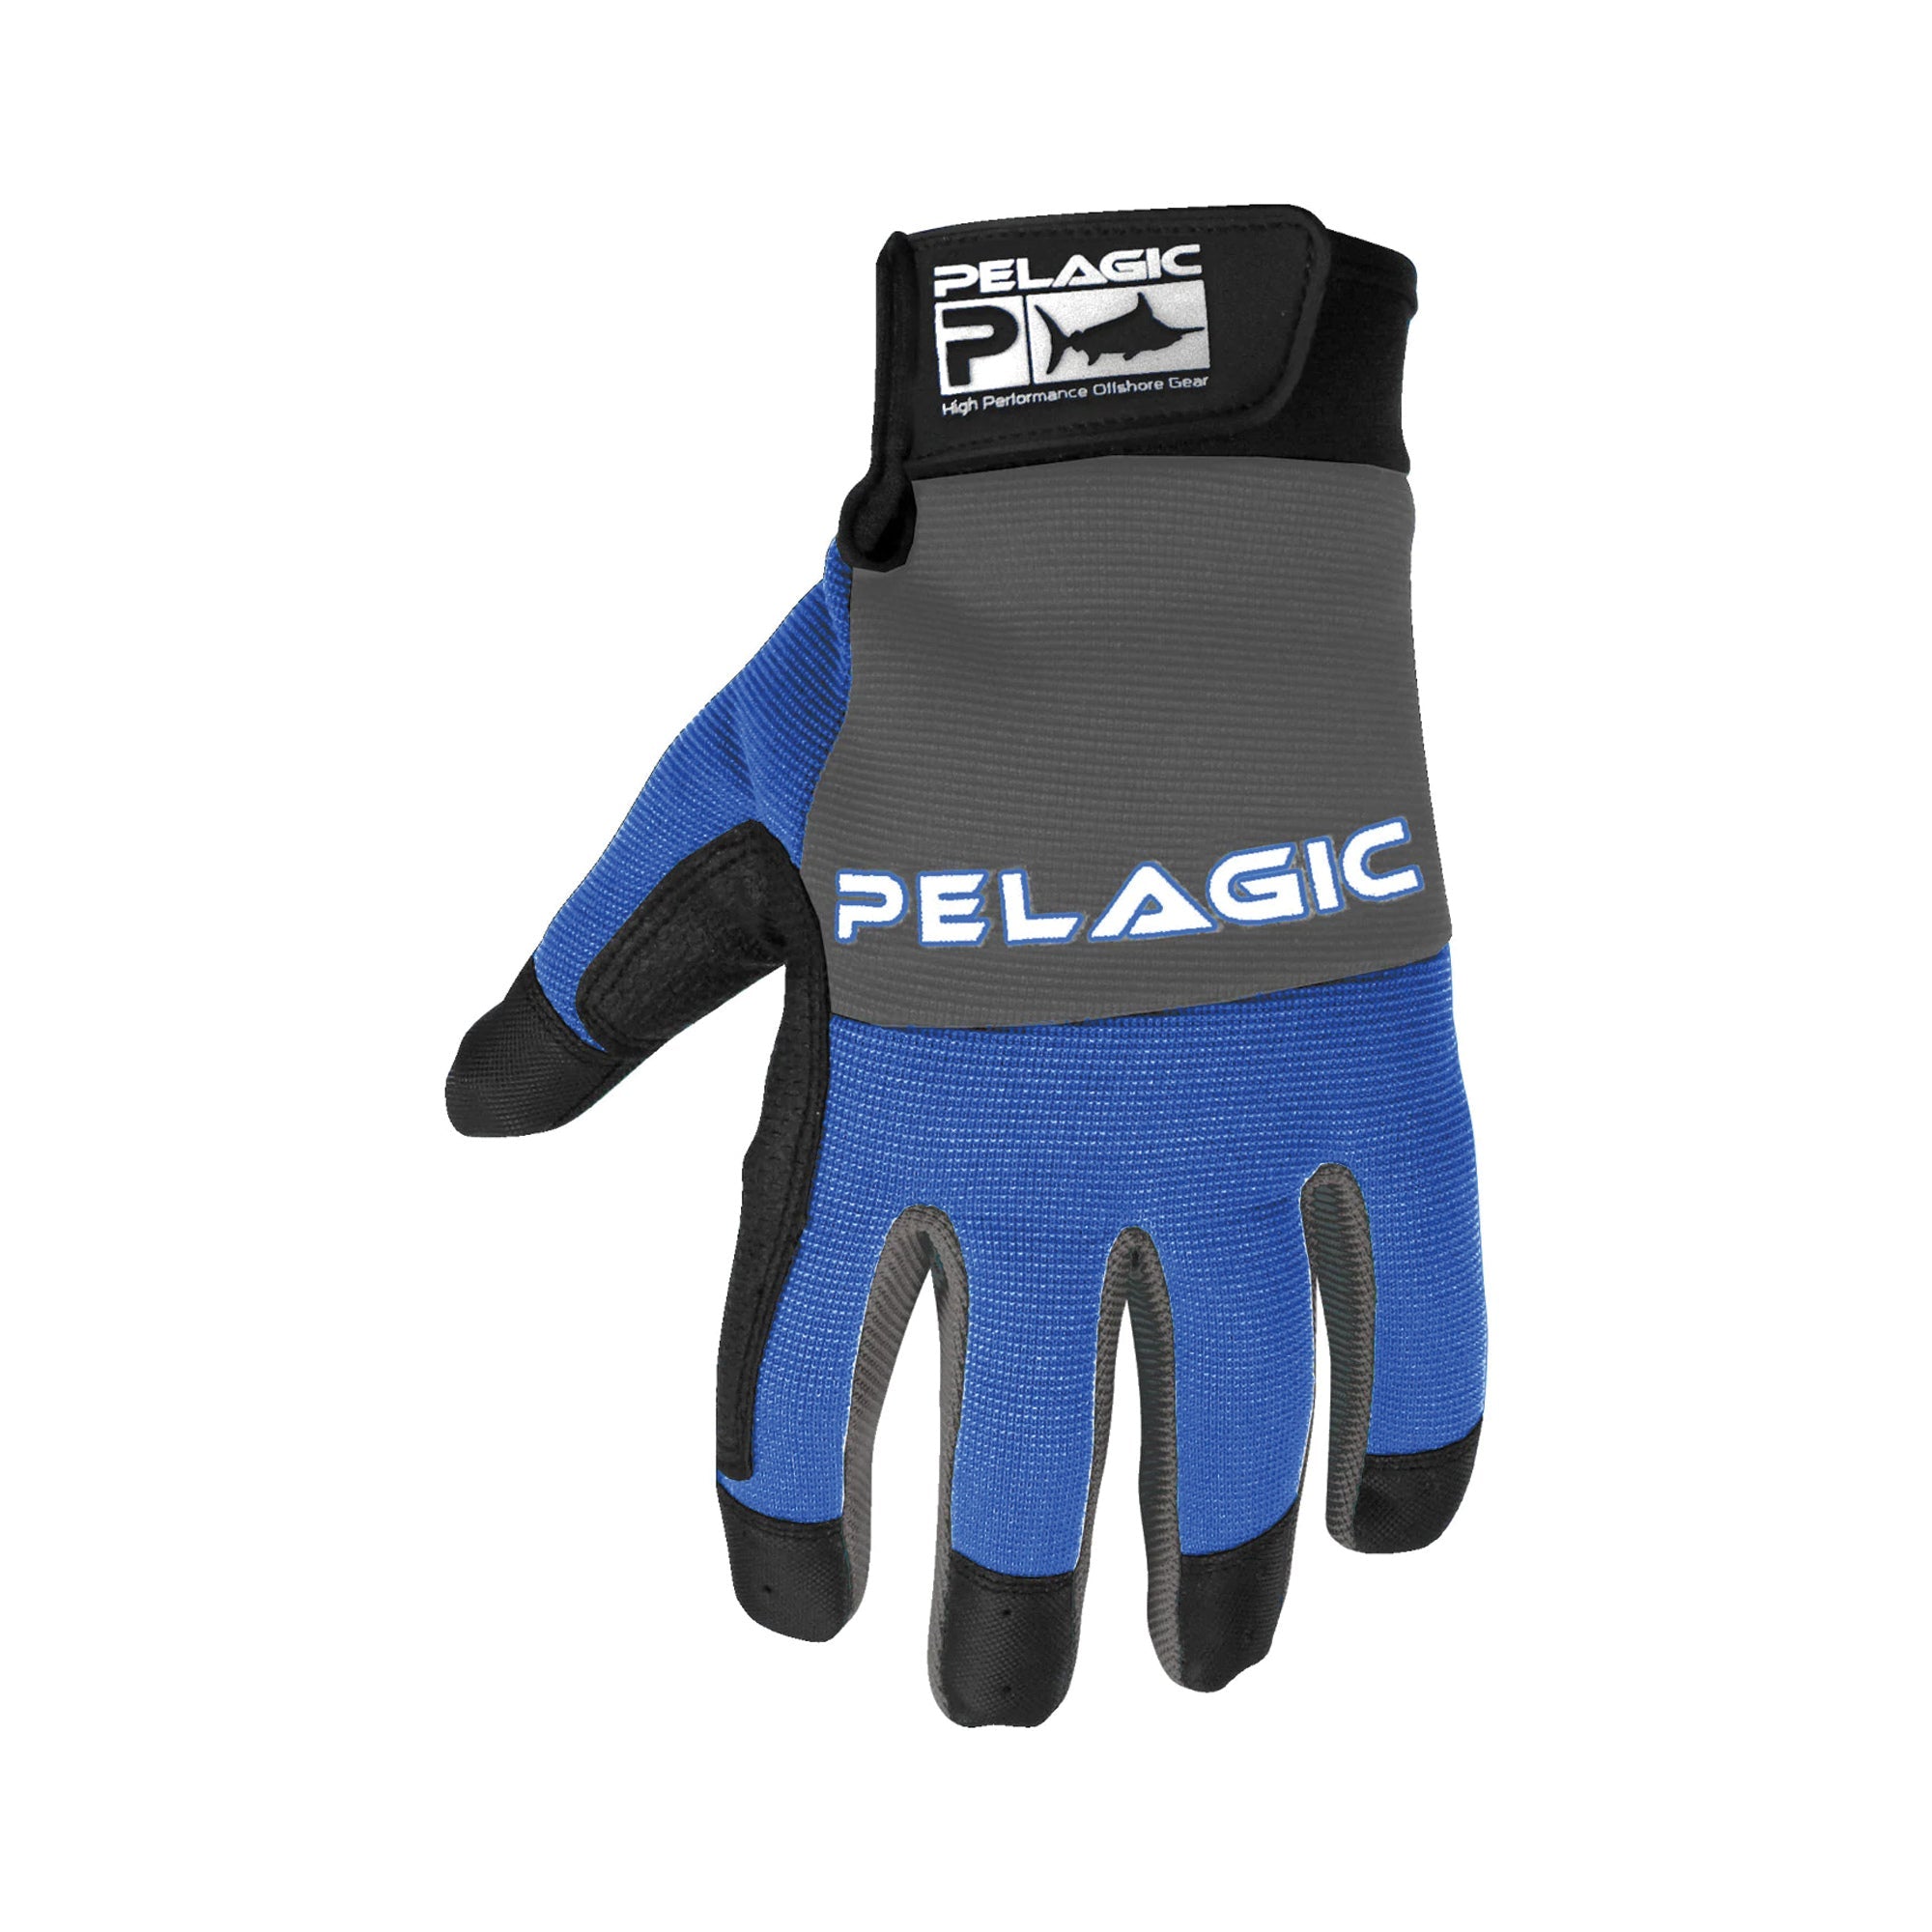 End Game Fishing Gloves | PELAGIC Fishing Gear